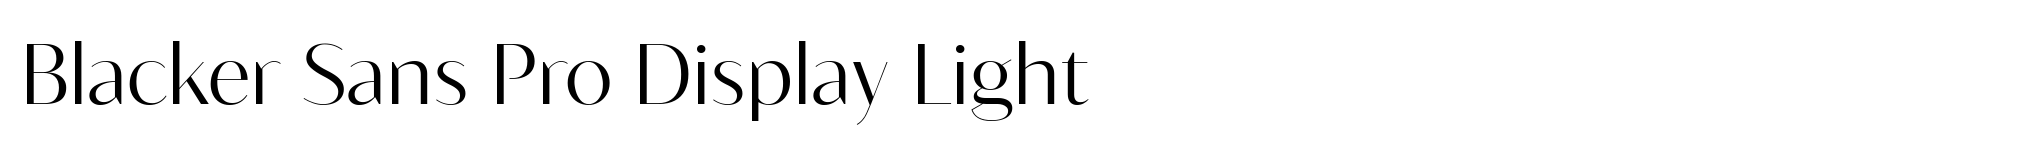 Blacker Sans Pro Display Light image